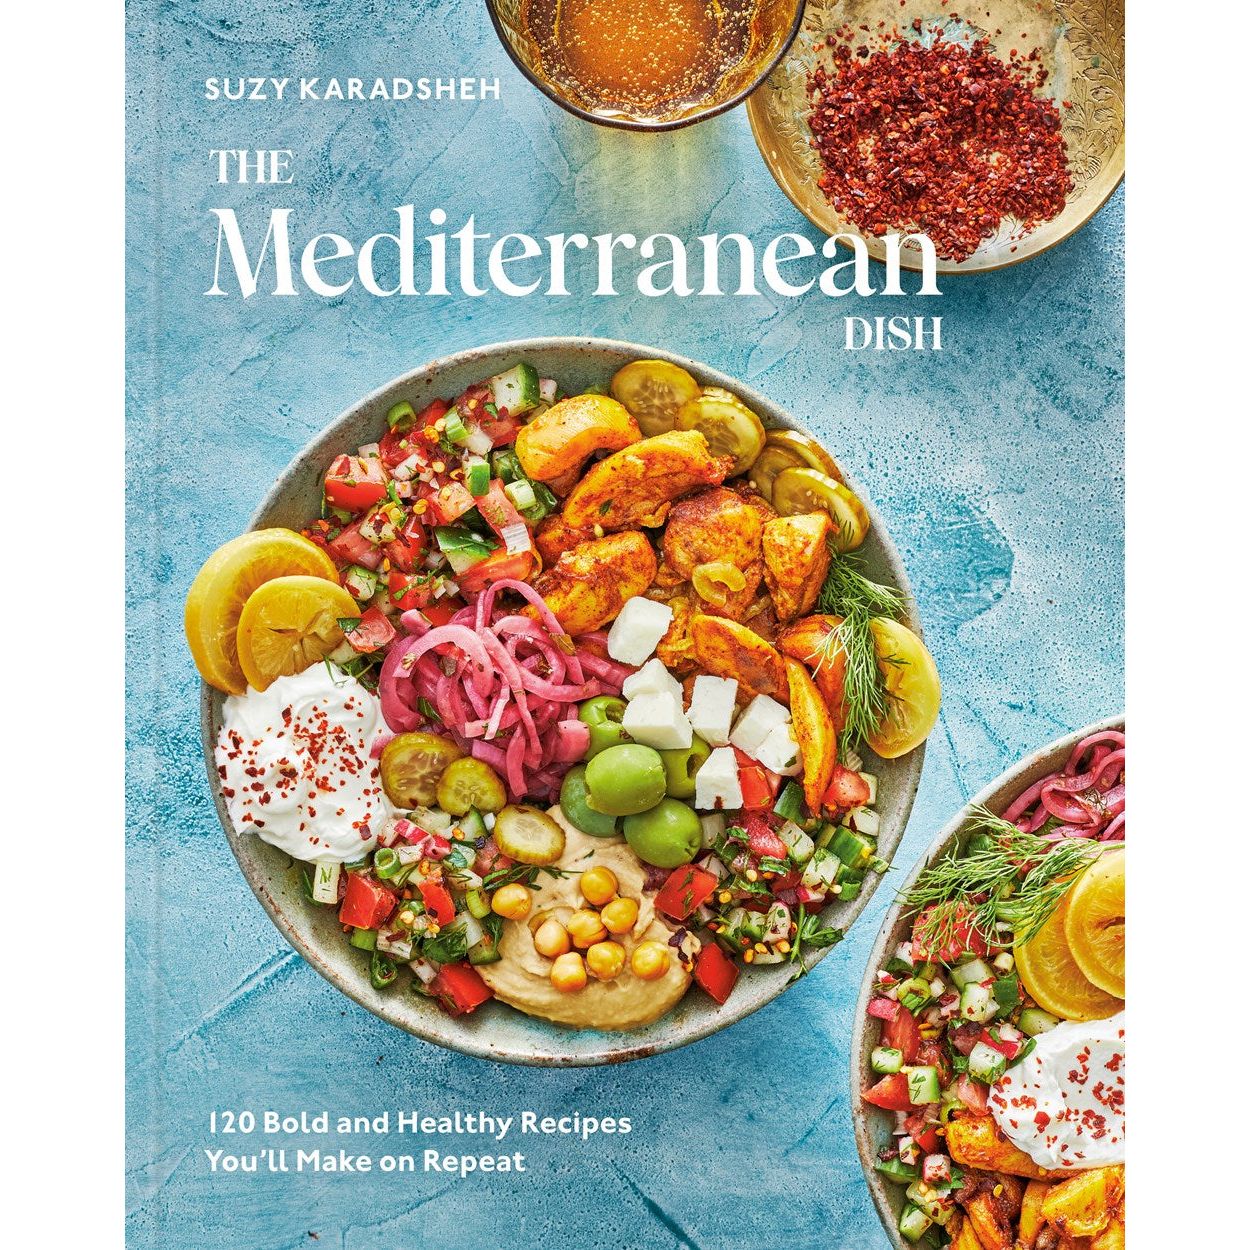 The Mediterranean Dish (Suzy Karadsheh)